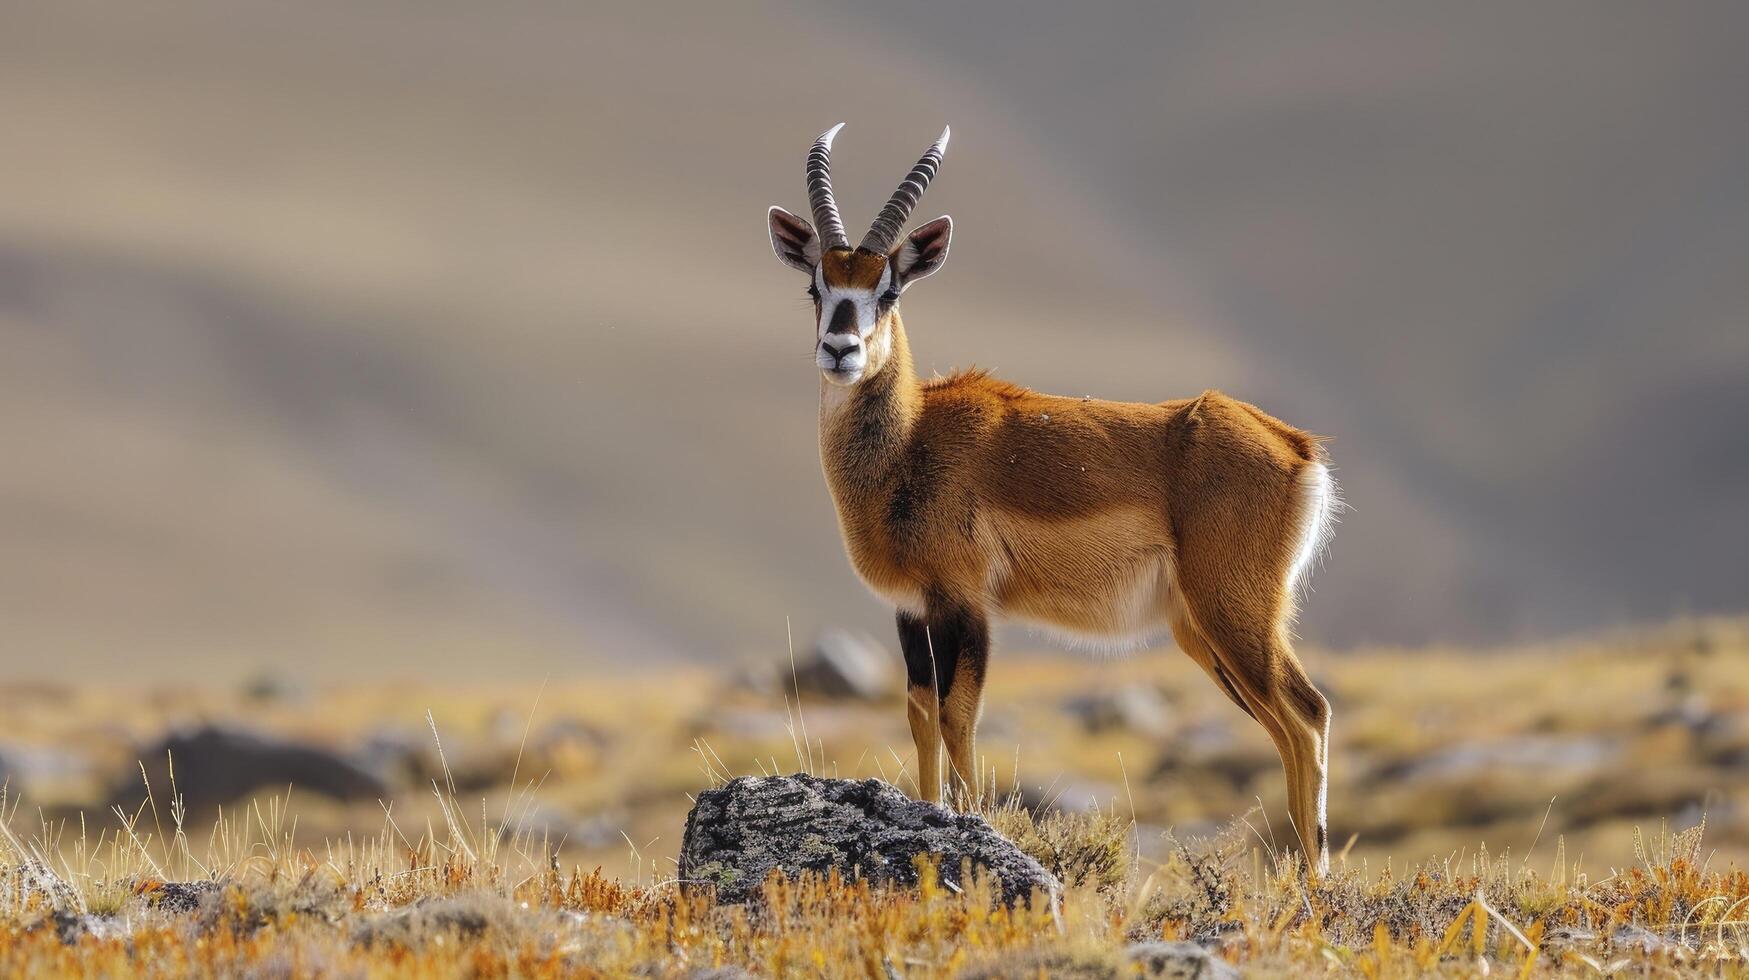 ai genererad i de vildmark, de majestätisk tibetan antilop, pantholops hodgsonii, roaming fritt i dess naturlig livsmiljö foto